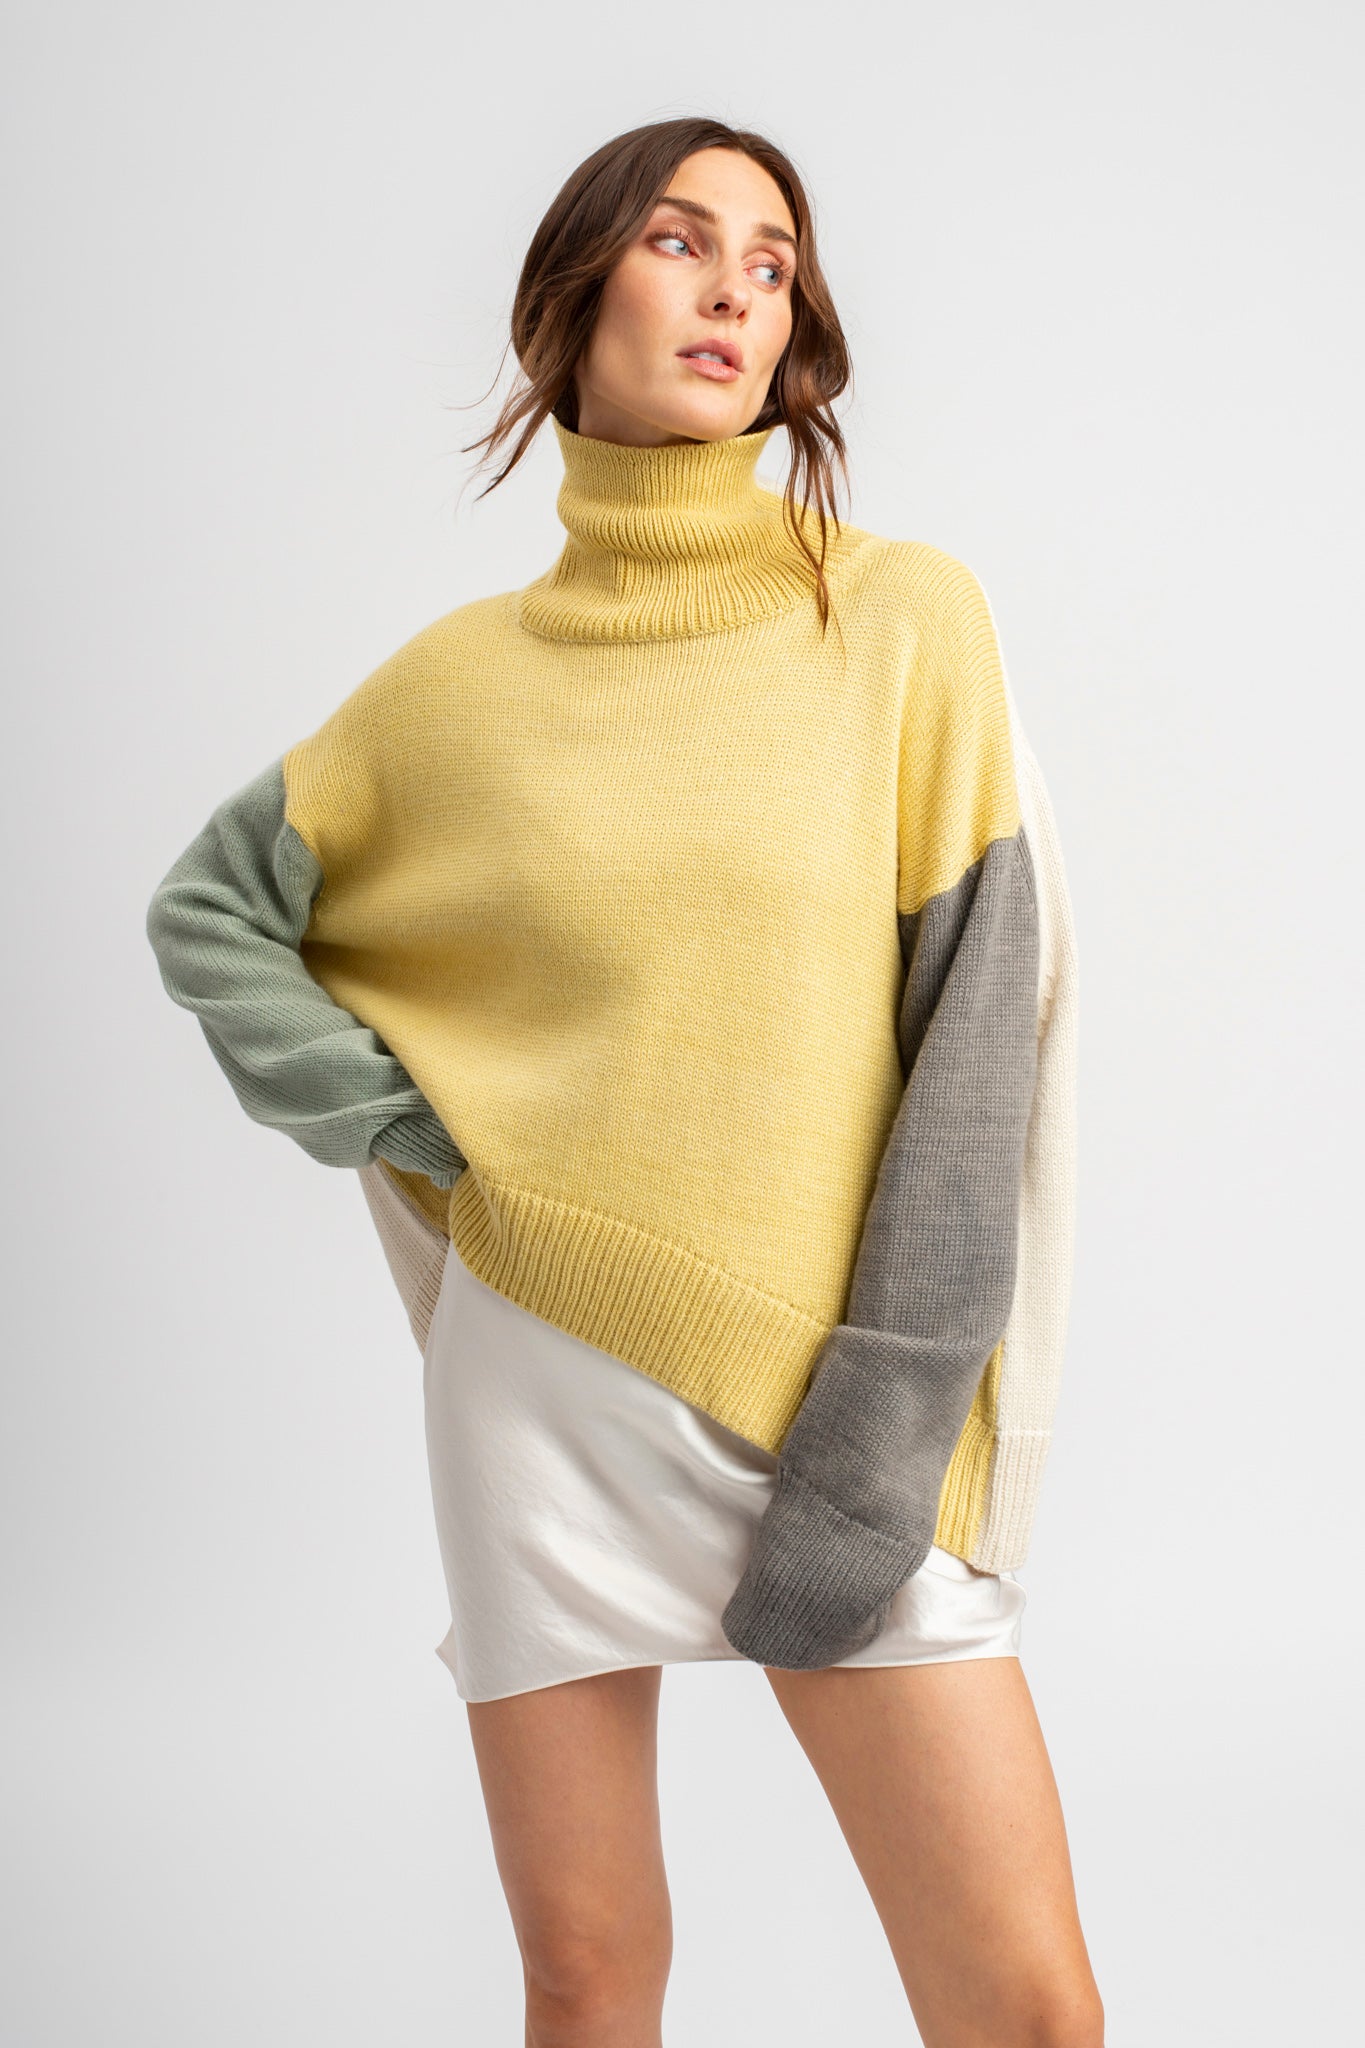 Model wearing turtleneck oversized sweater in multi-color yellow alpaca wool, front view